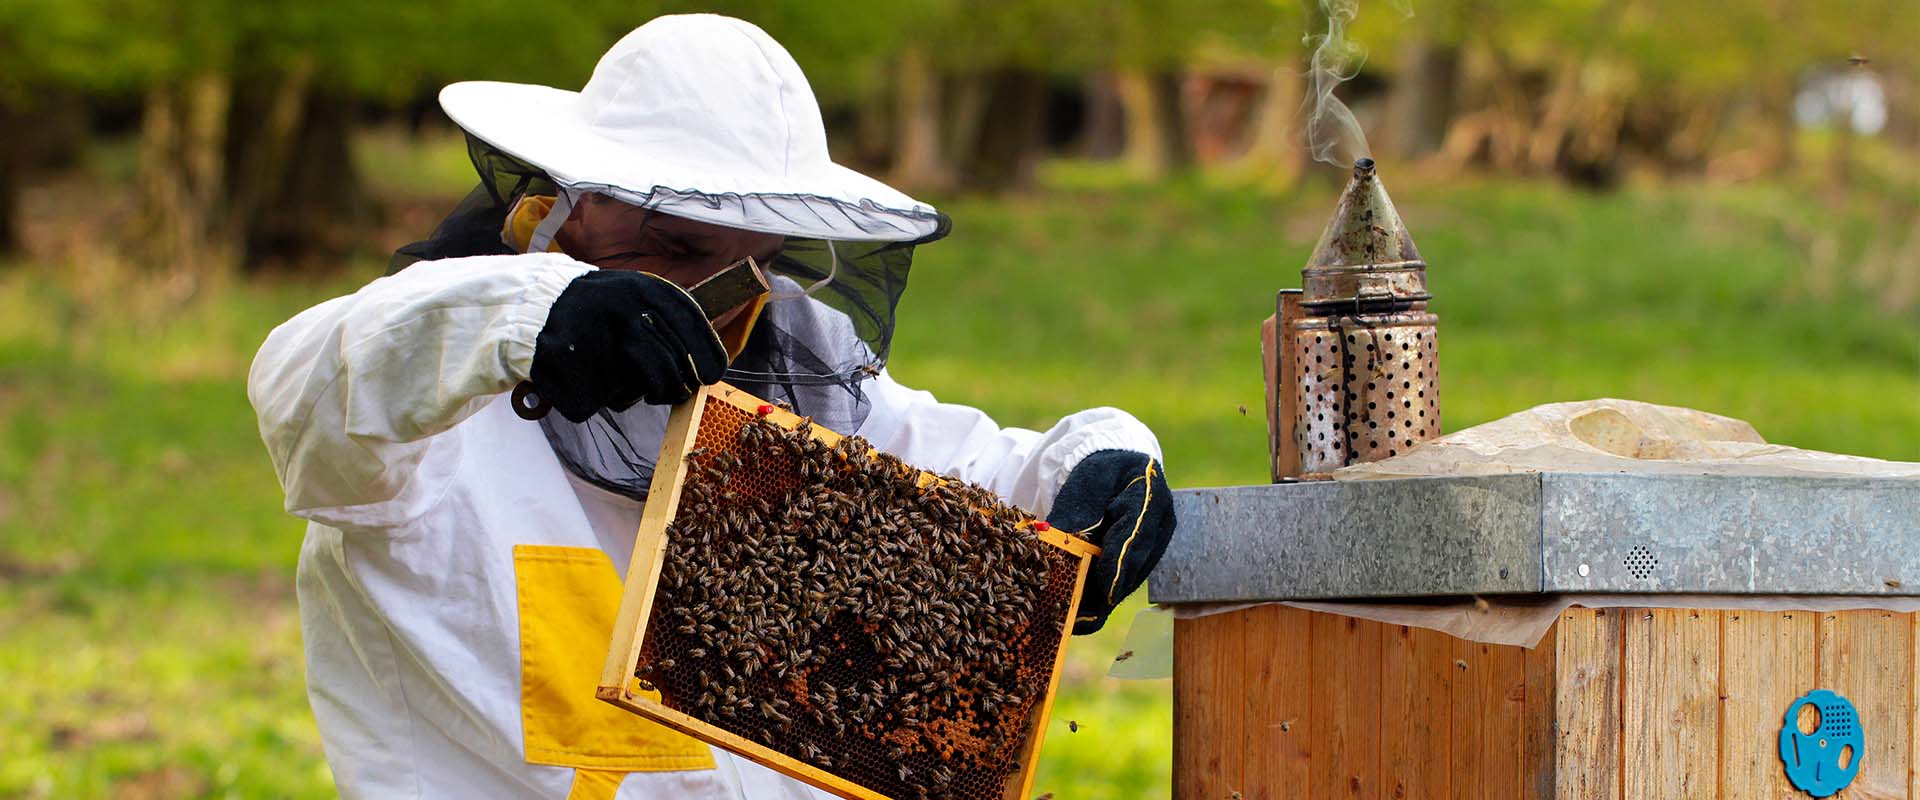 Beekeeping Supplies Image 